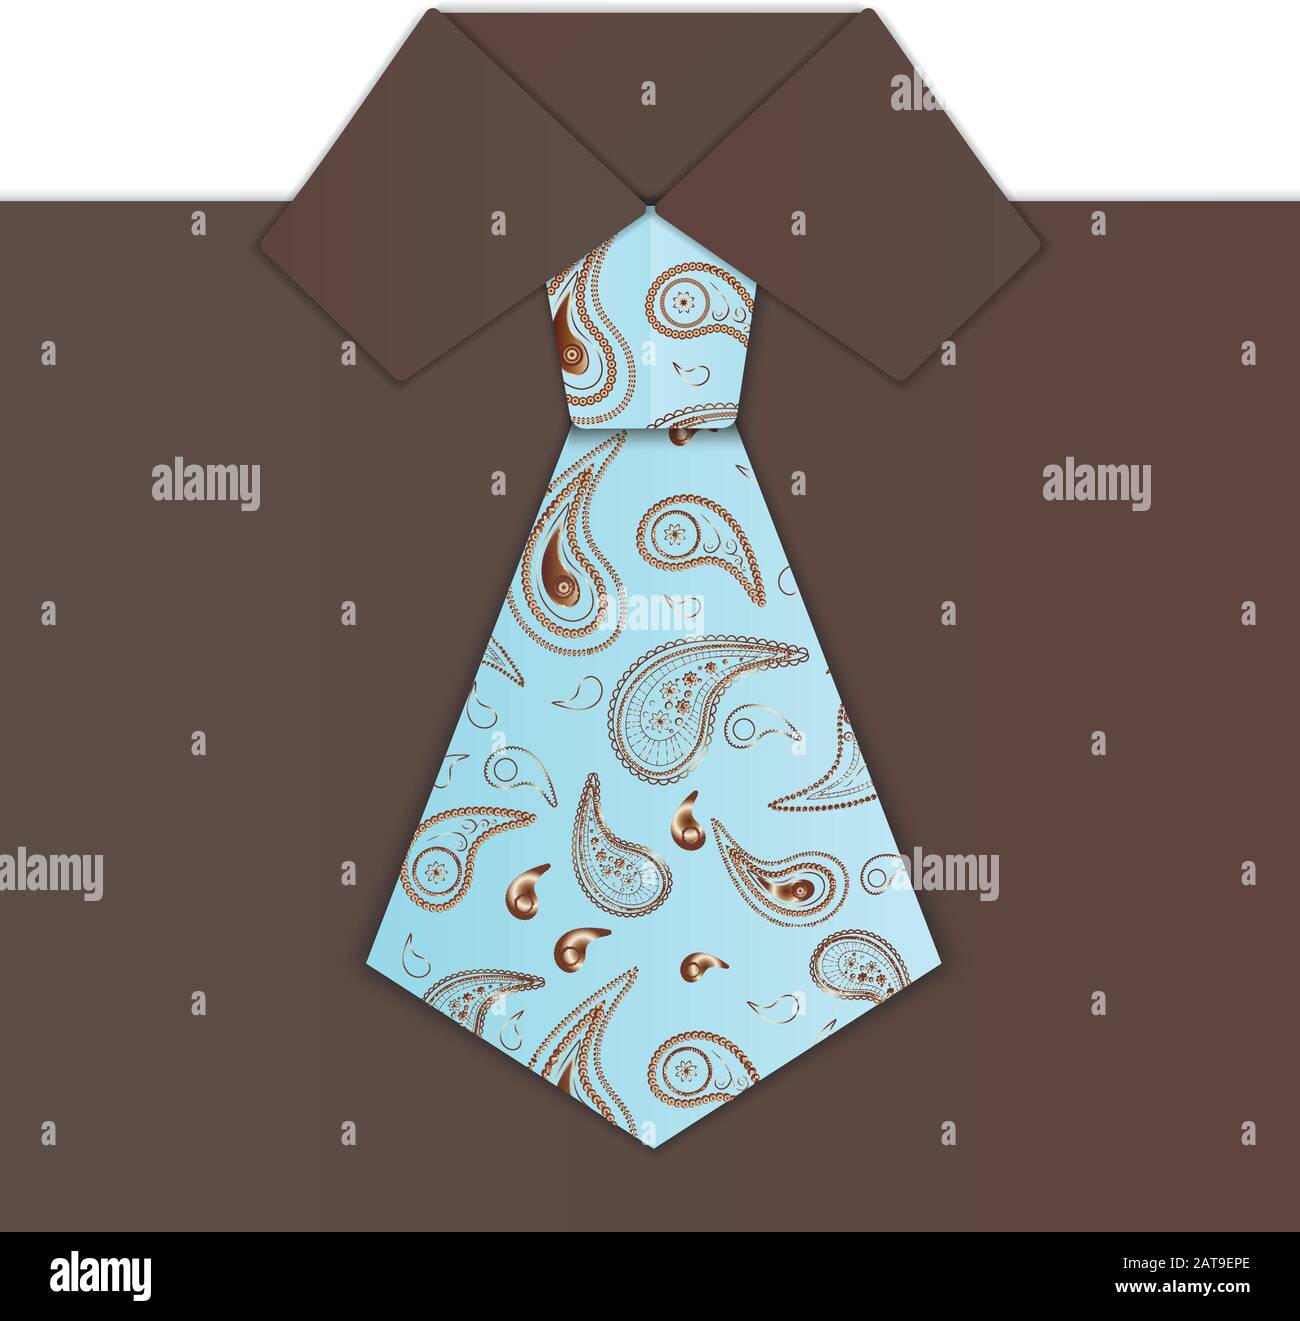 Men's Tie and Shirt Collar   - vector illustration Stock Vector